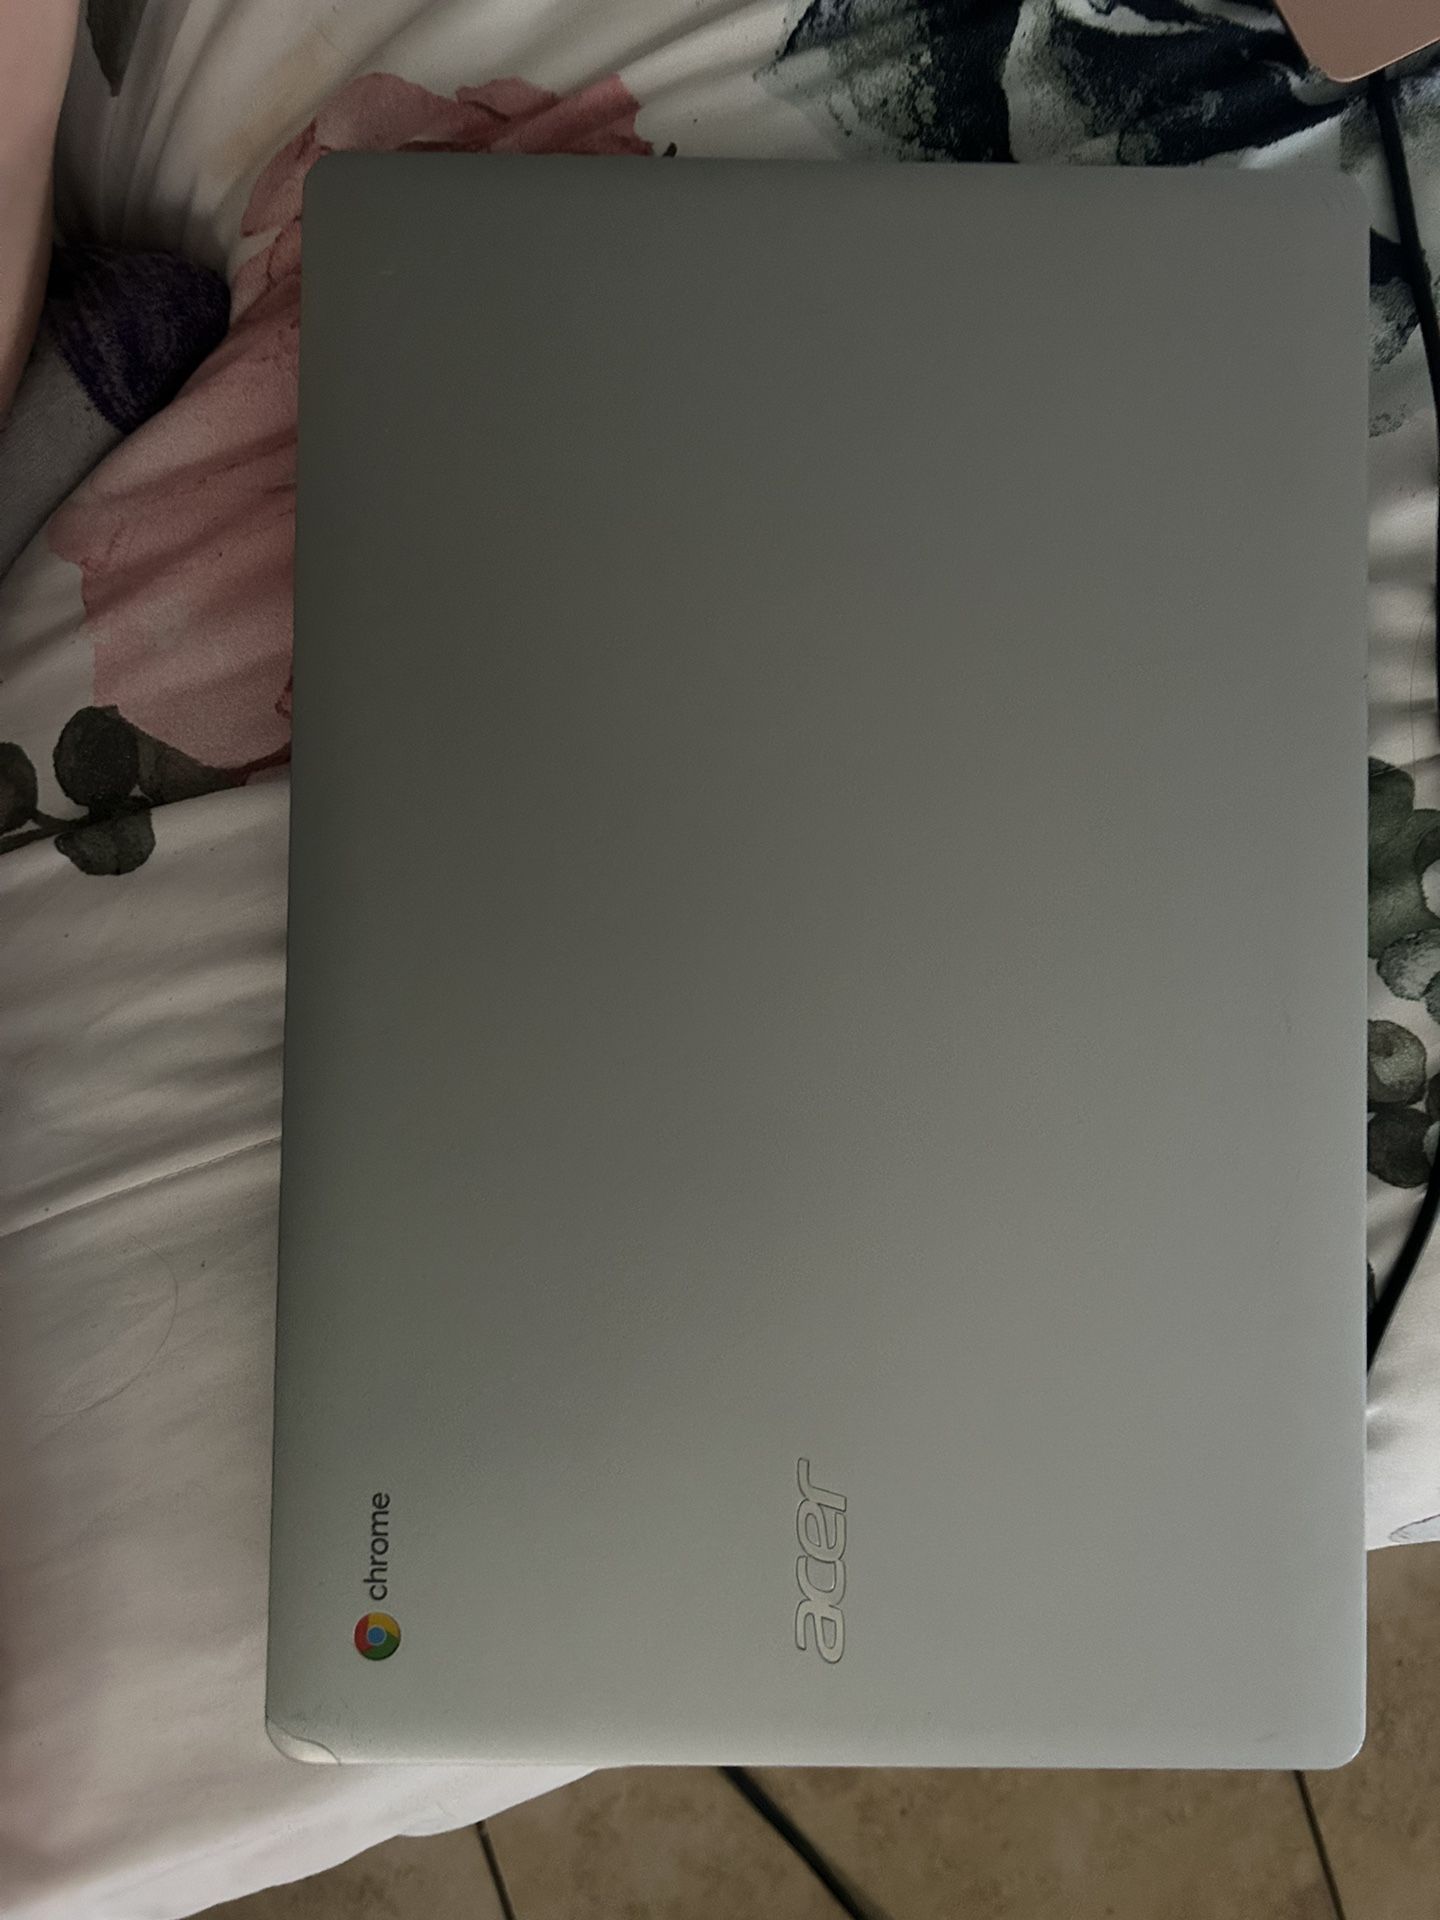 Chromebook Acer 